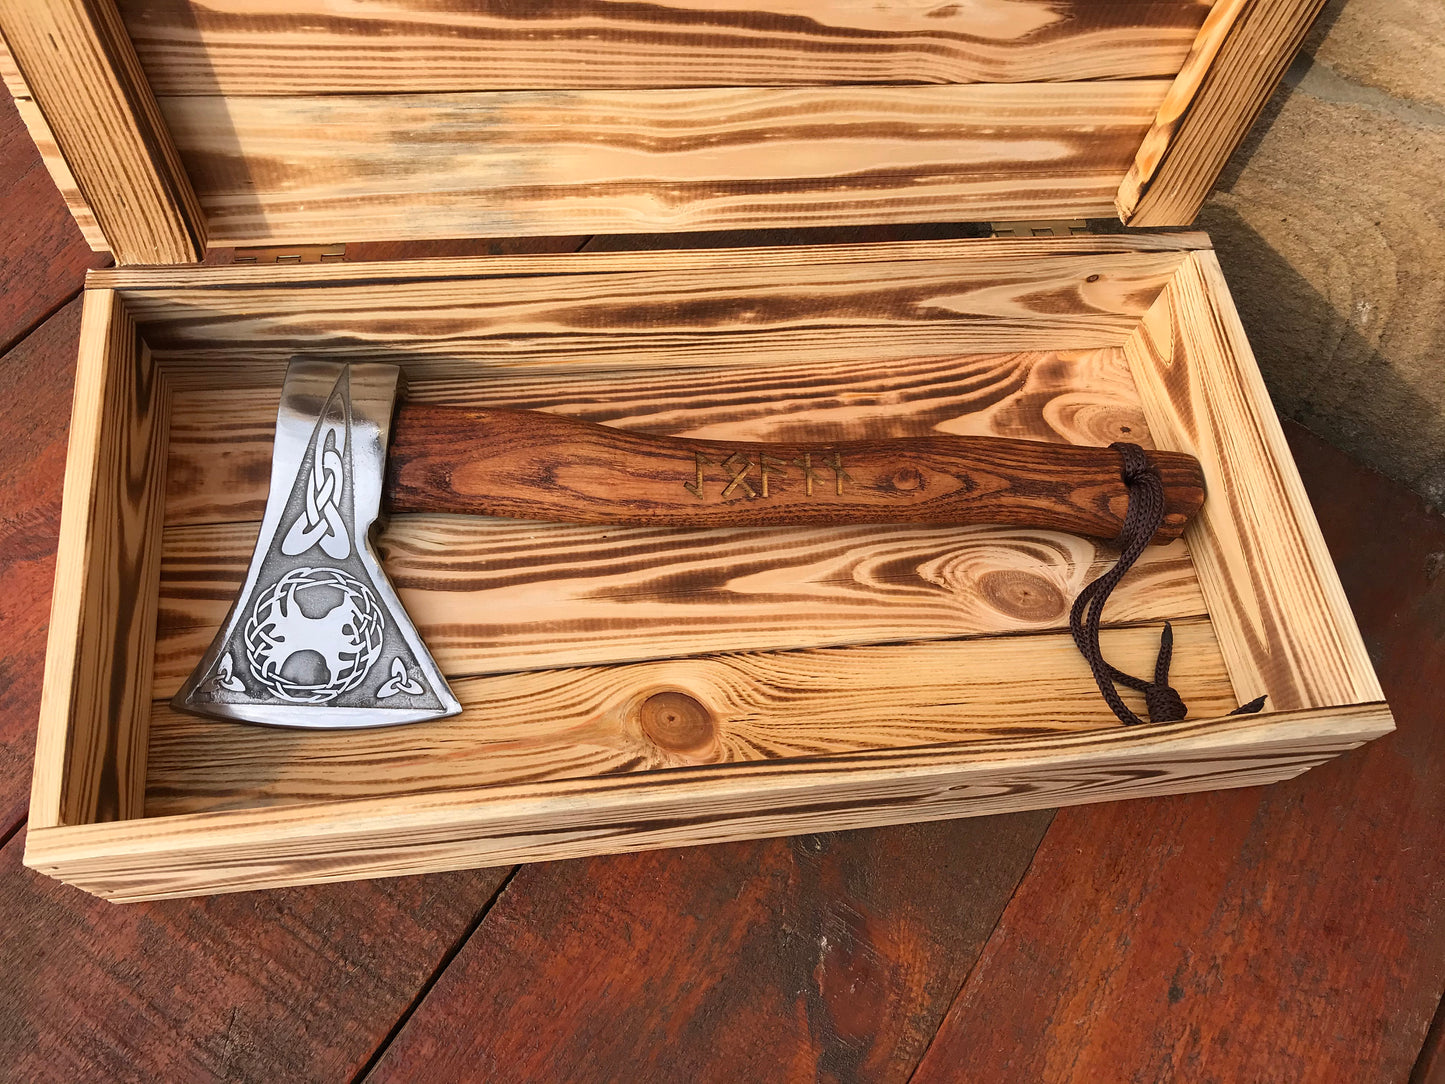 Runic gift, runic axe, mens gift, tree of life, viking axe, gift box, Celtic, hatchet, viking, wooden gift, handyman tool, groomsmen gift